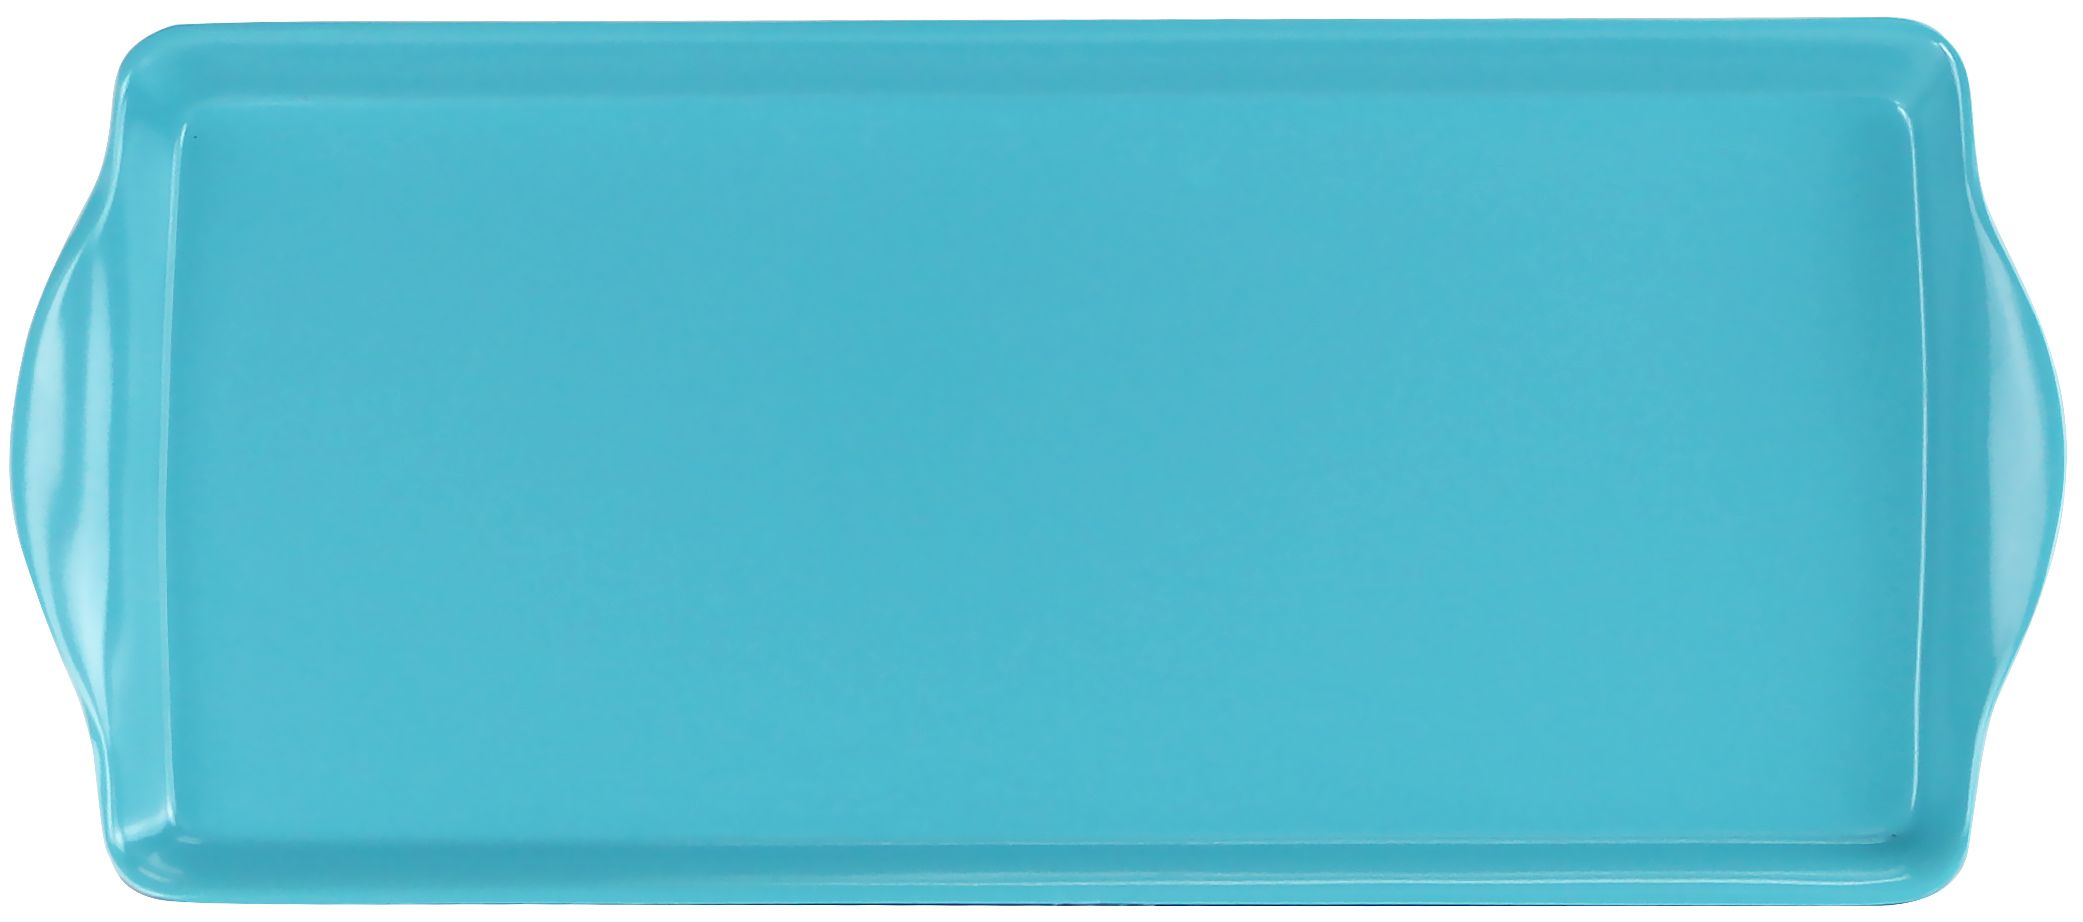 Picture of Reston Lloyd 06702 Tidbit Tray  Turquoise 